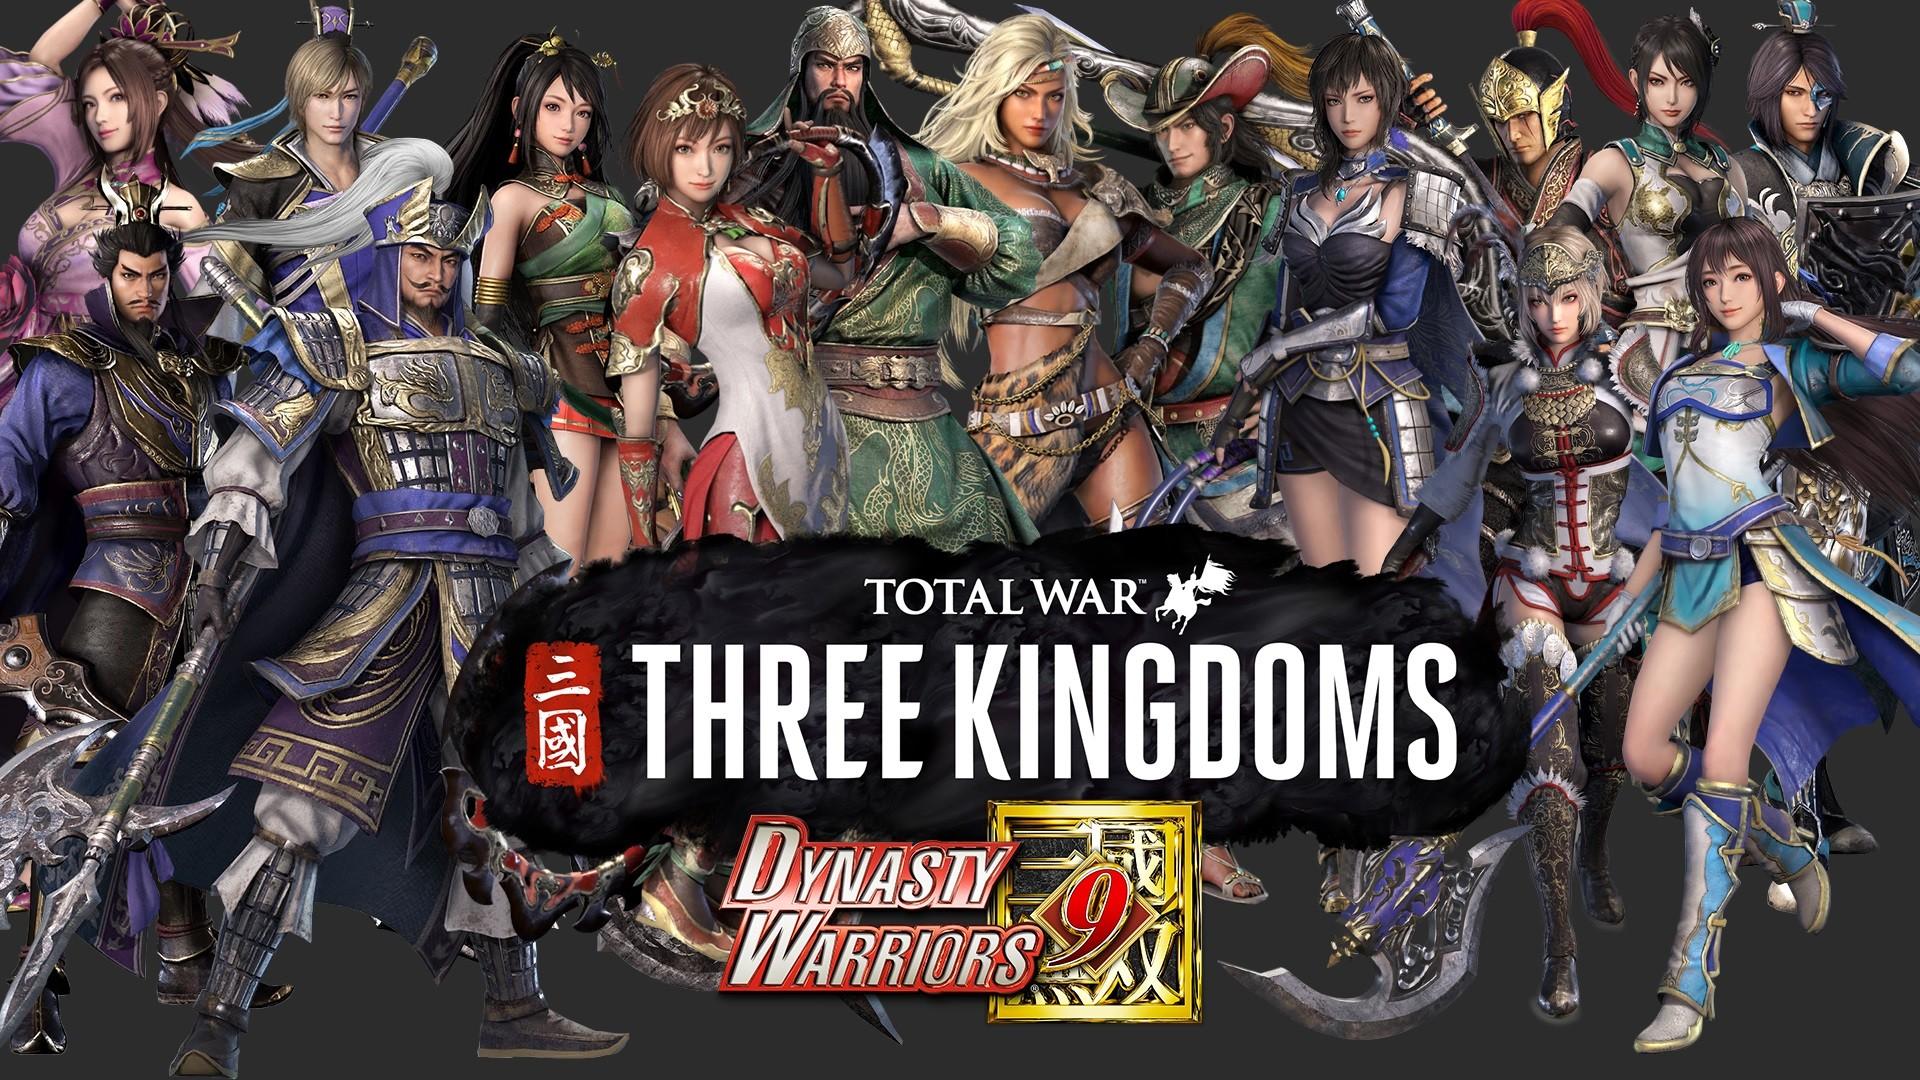 Мод персонажей Total War - Dynasty Warriors 9 для Total War Three Kingdoms